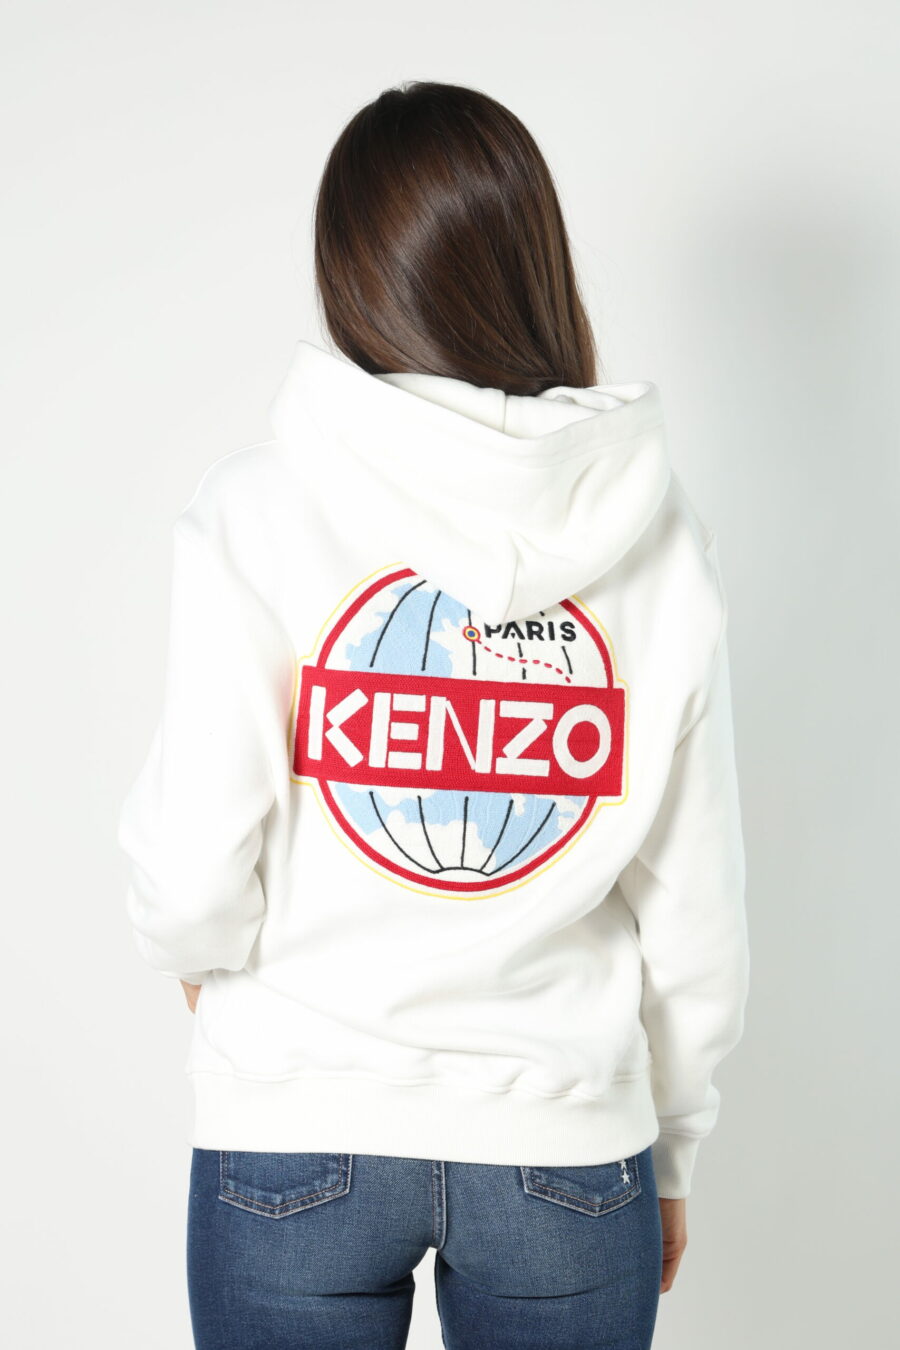 Sudadera blanca con capucha y minilogo "kenzo travel" - 8052865435499 339 scaled